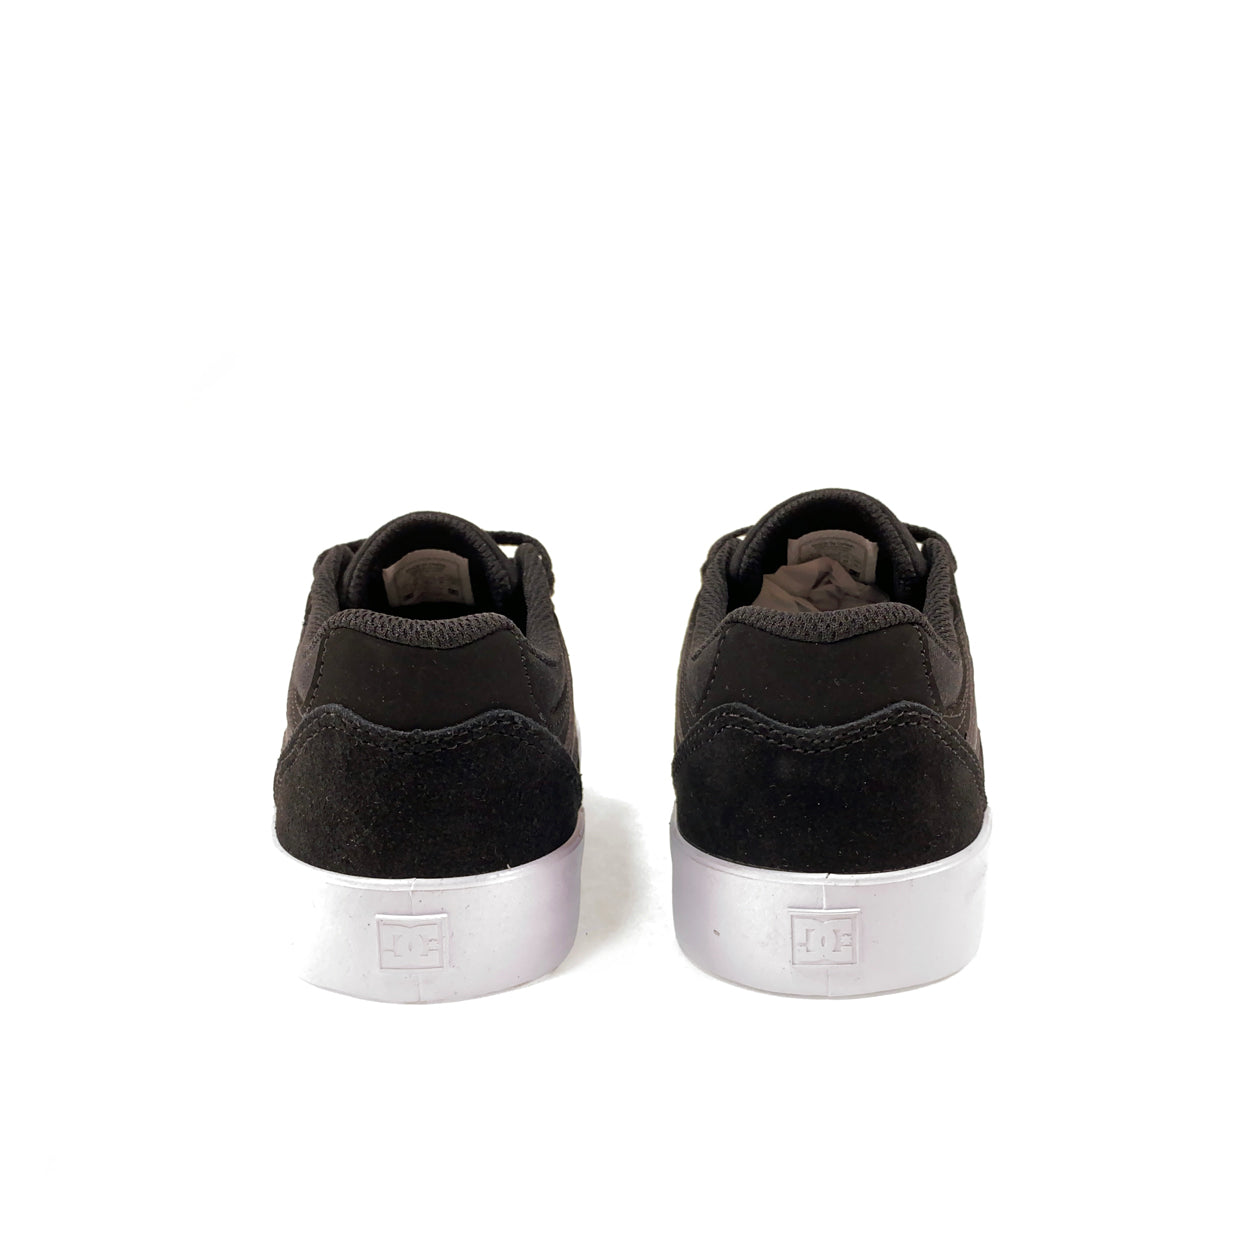 DC Shoes Kids Kalis Vulc Skate Shoes - Black / Black / White - Prime Delux Store